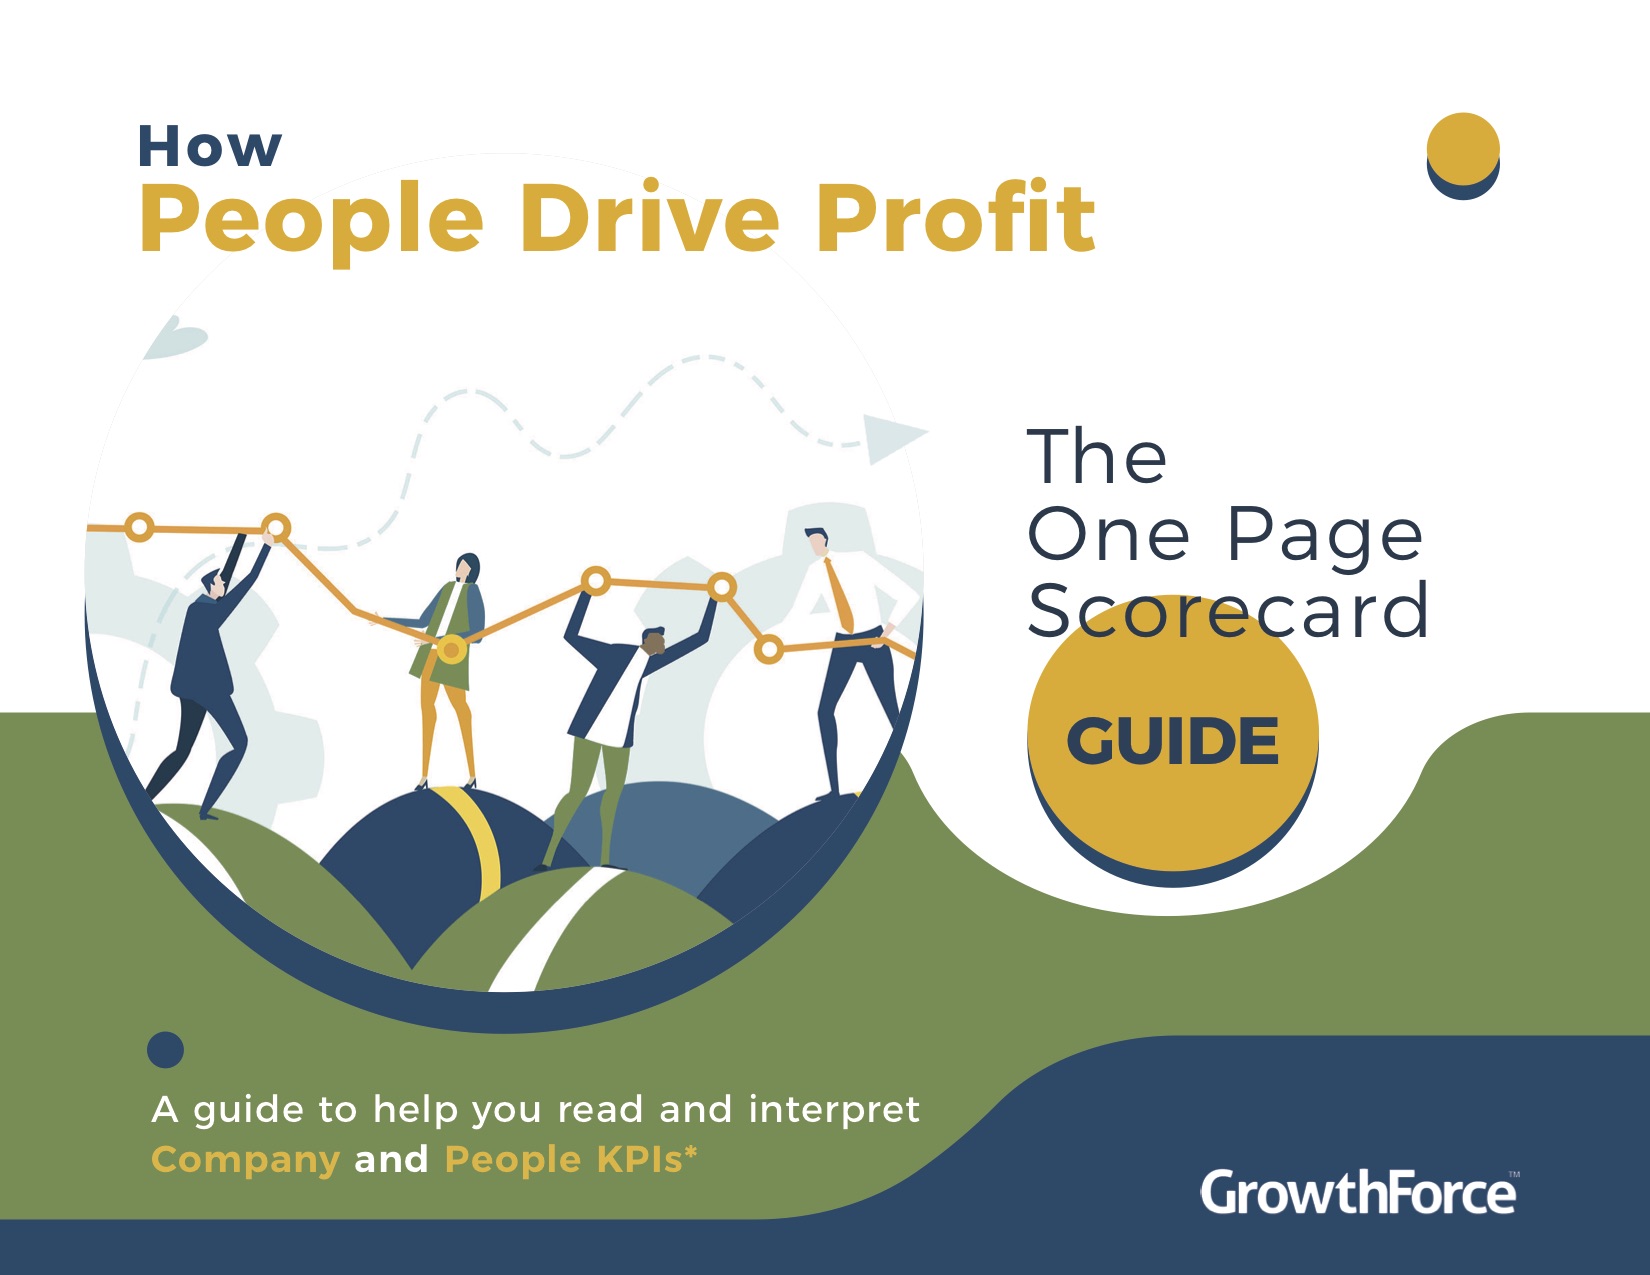 GrowthForce - How People Drive Profits (4) (dragged) 2